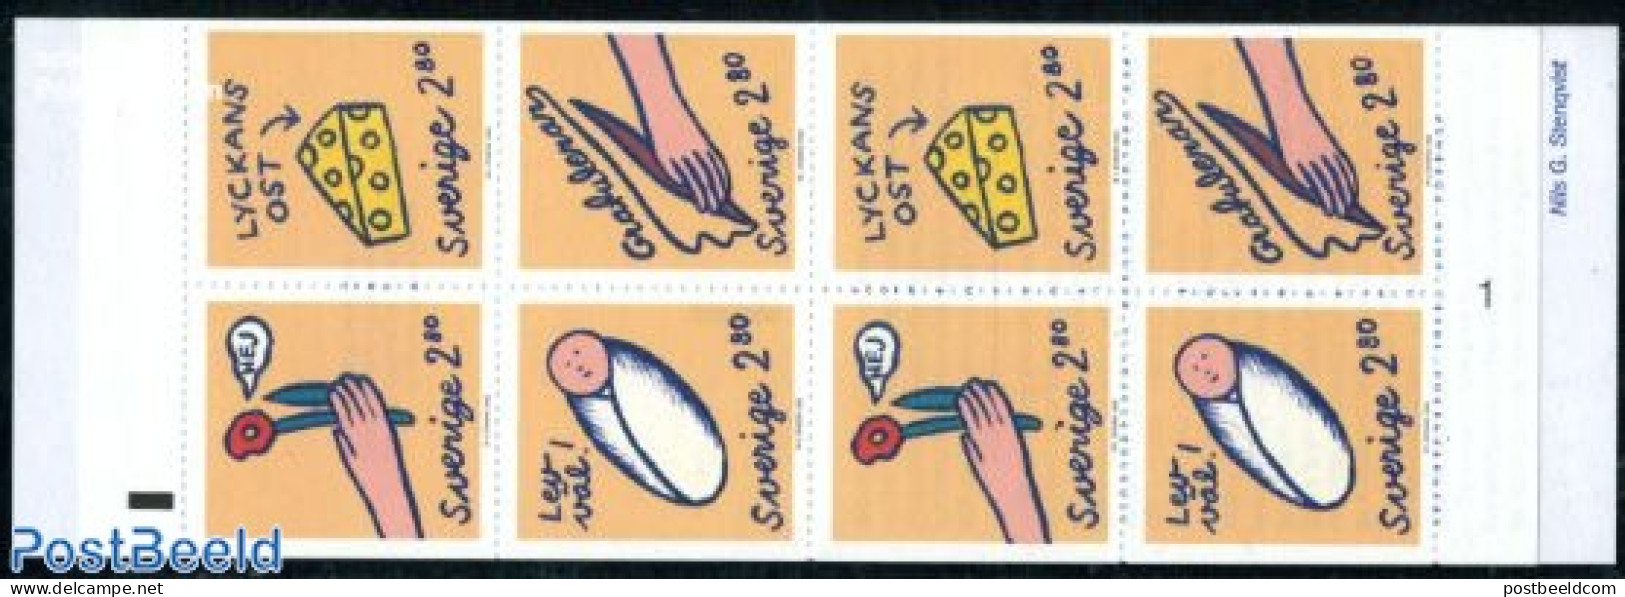 Sweden 1992 Greeting Stamps Booklet, Mint NH, Stamp Booklets - Nuevos